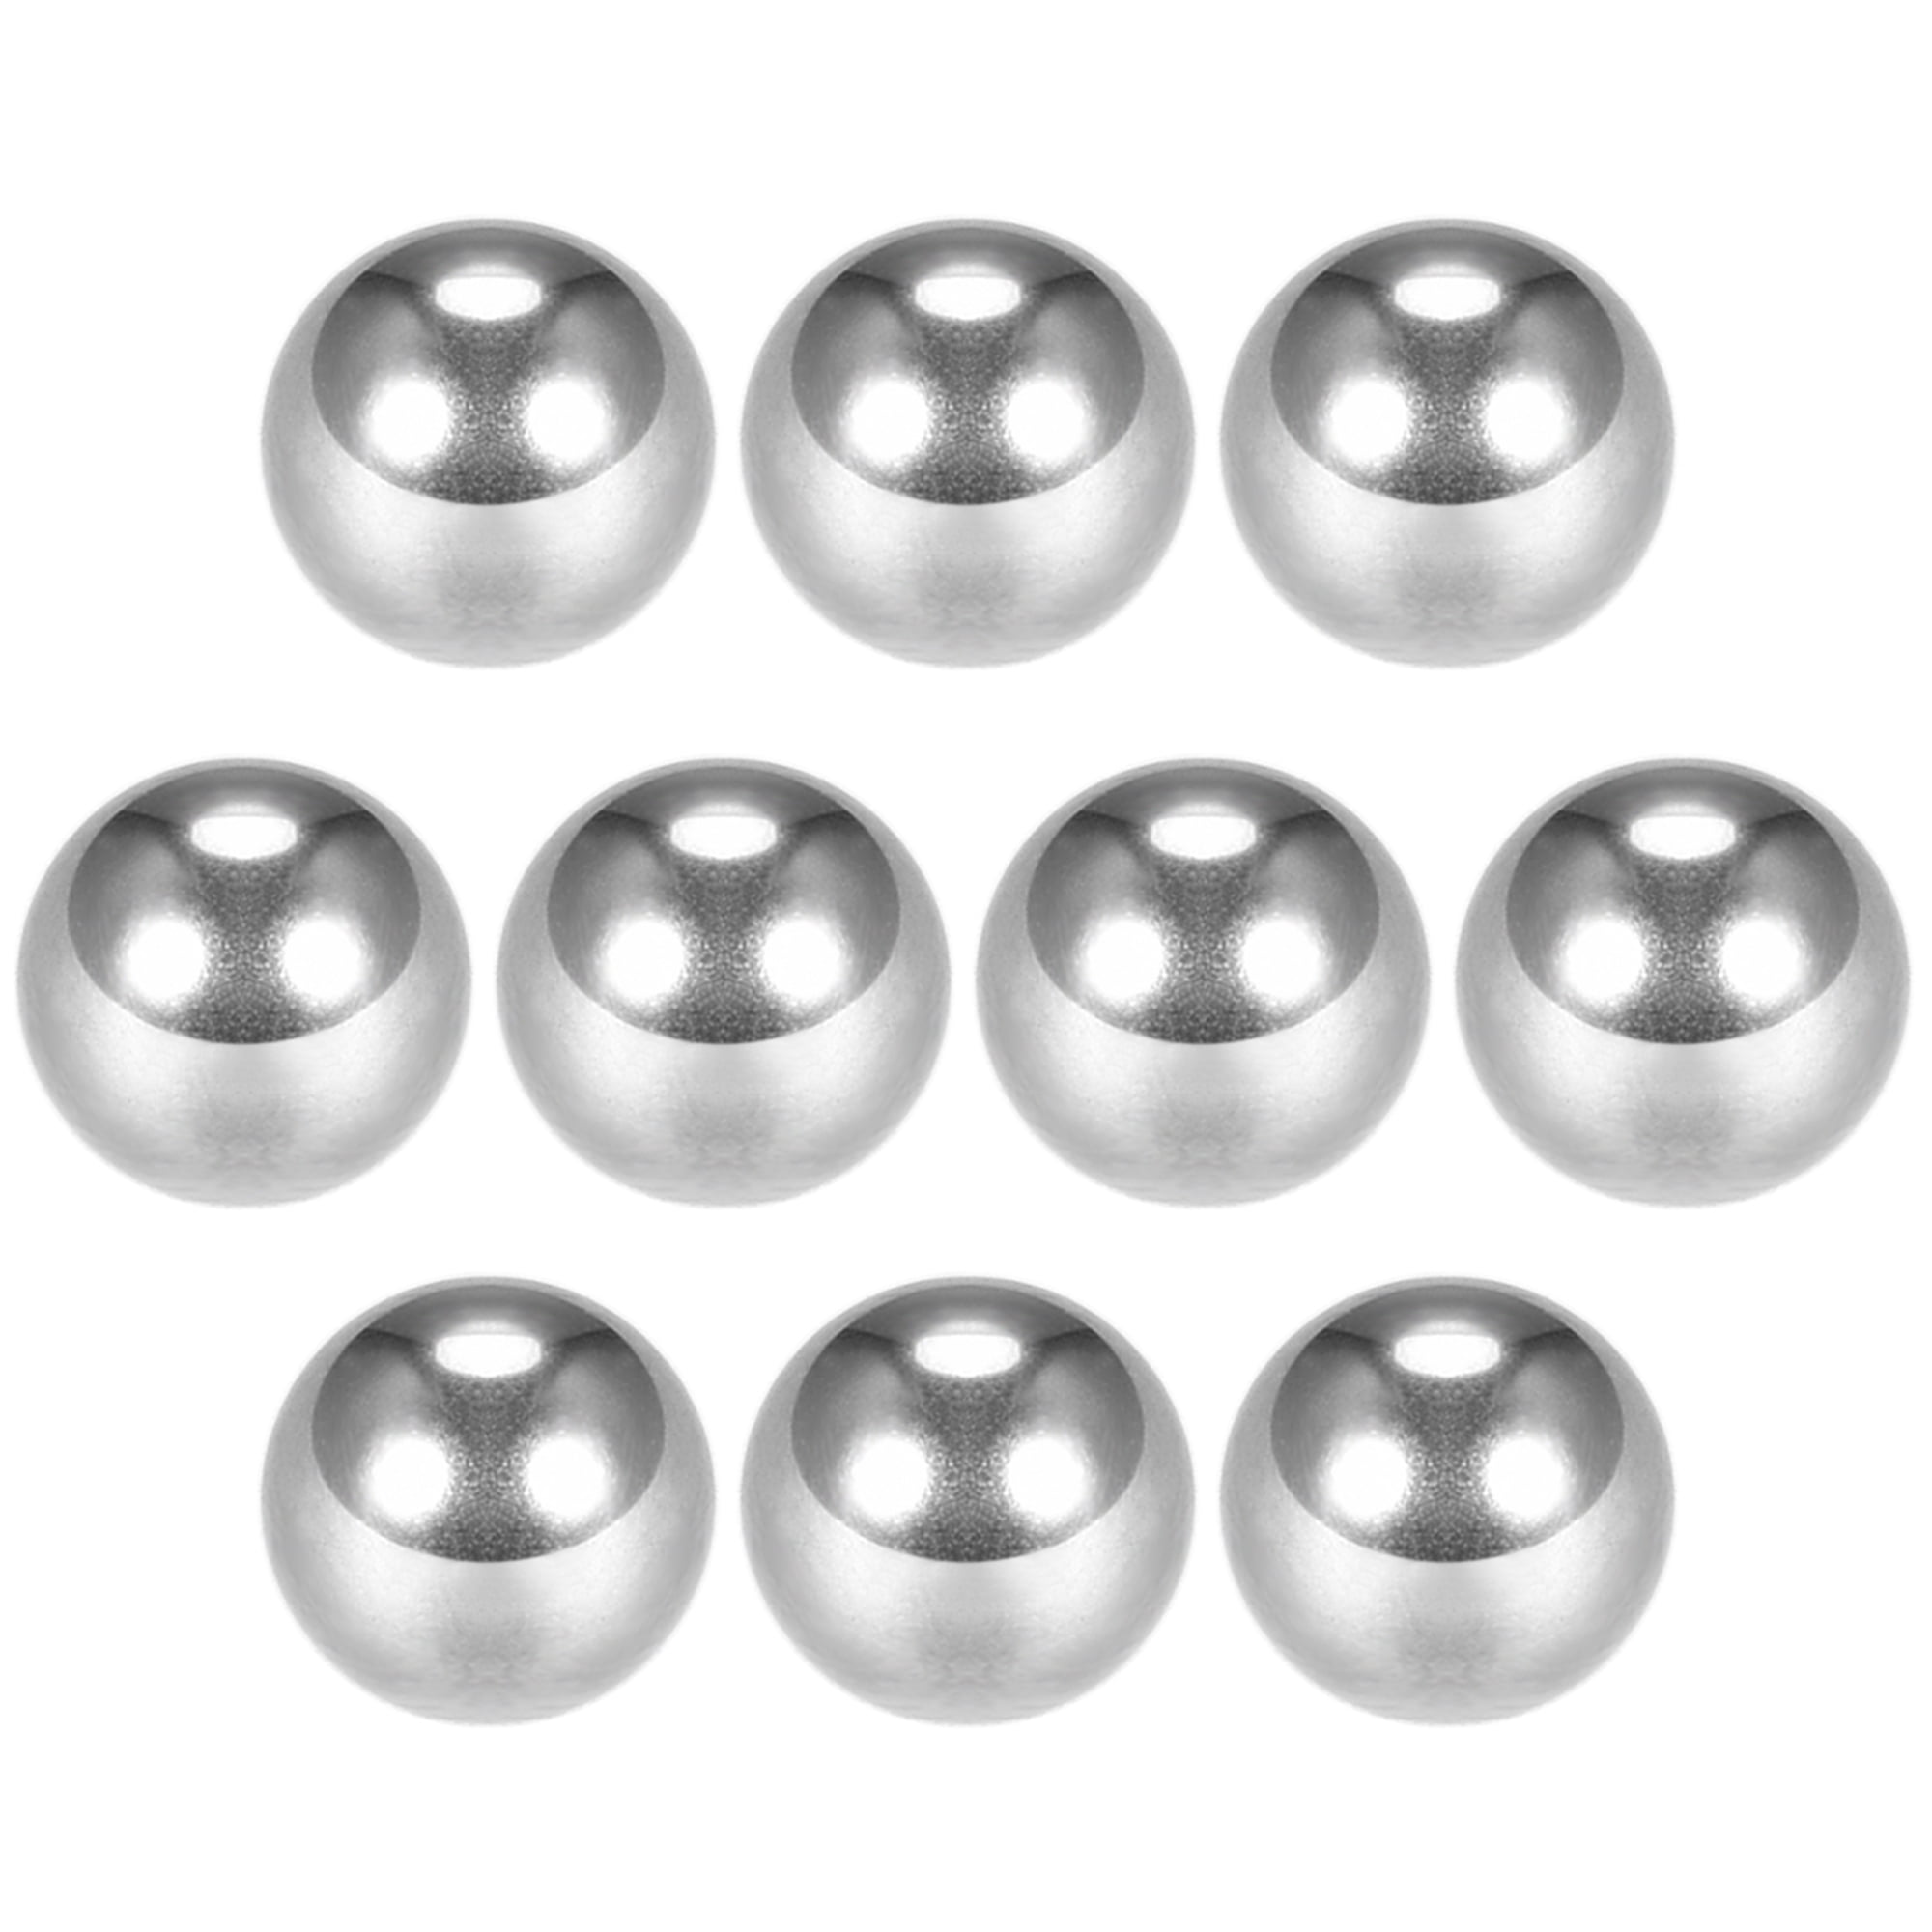 Five 3" Inch G25 Precision Chromium Chrome Steel Bearing Balls AISI 52100 